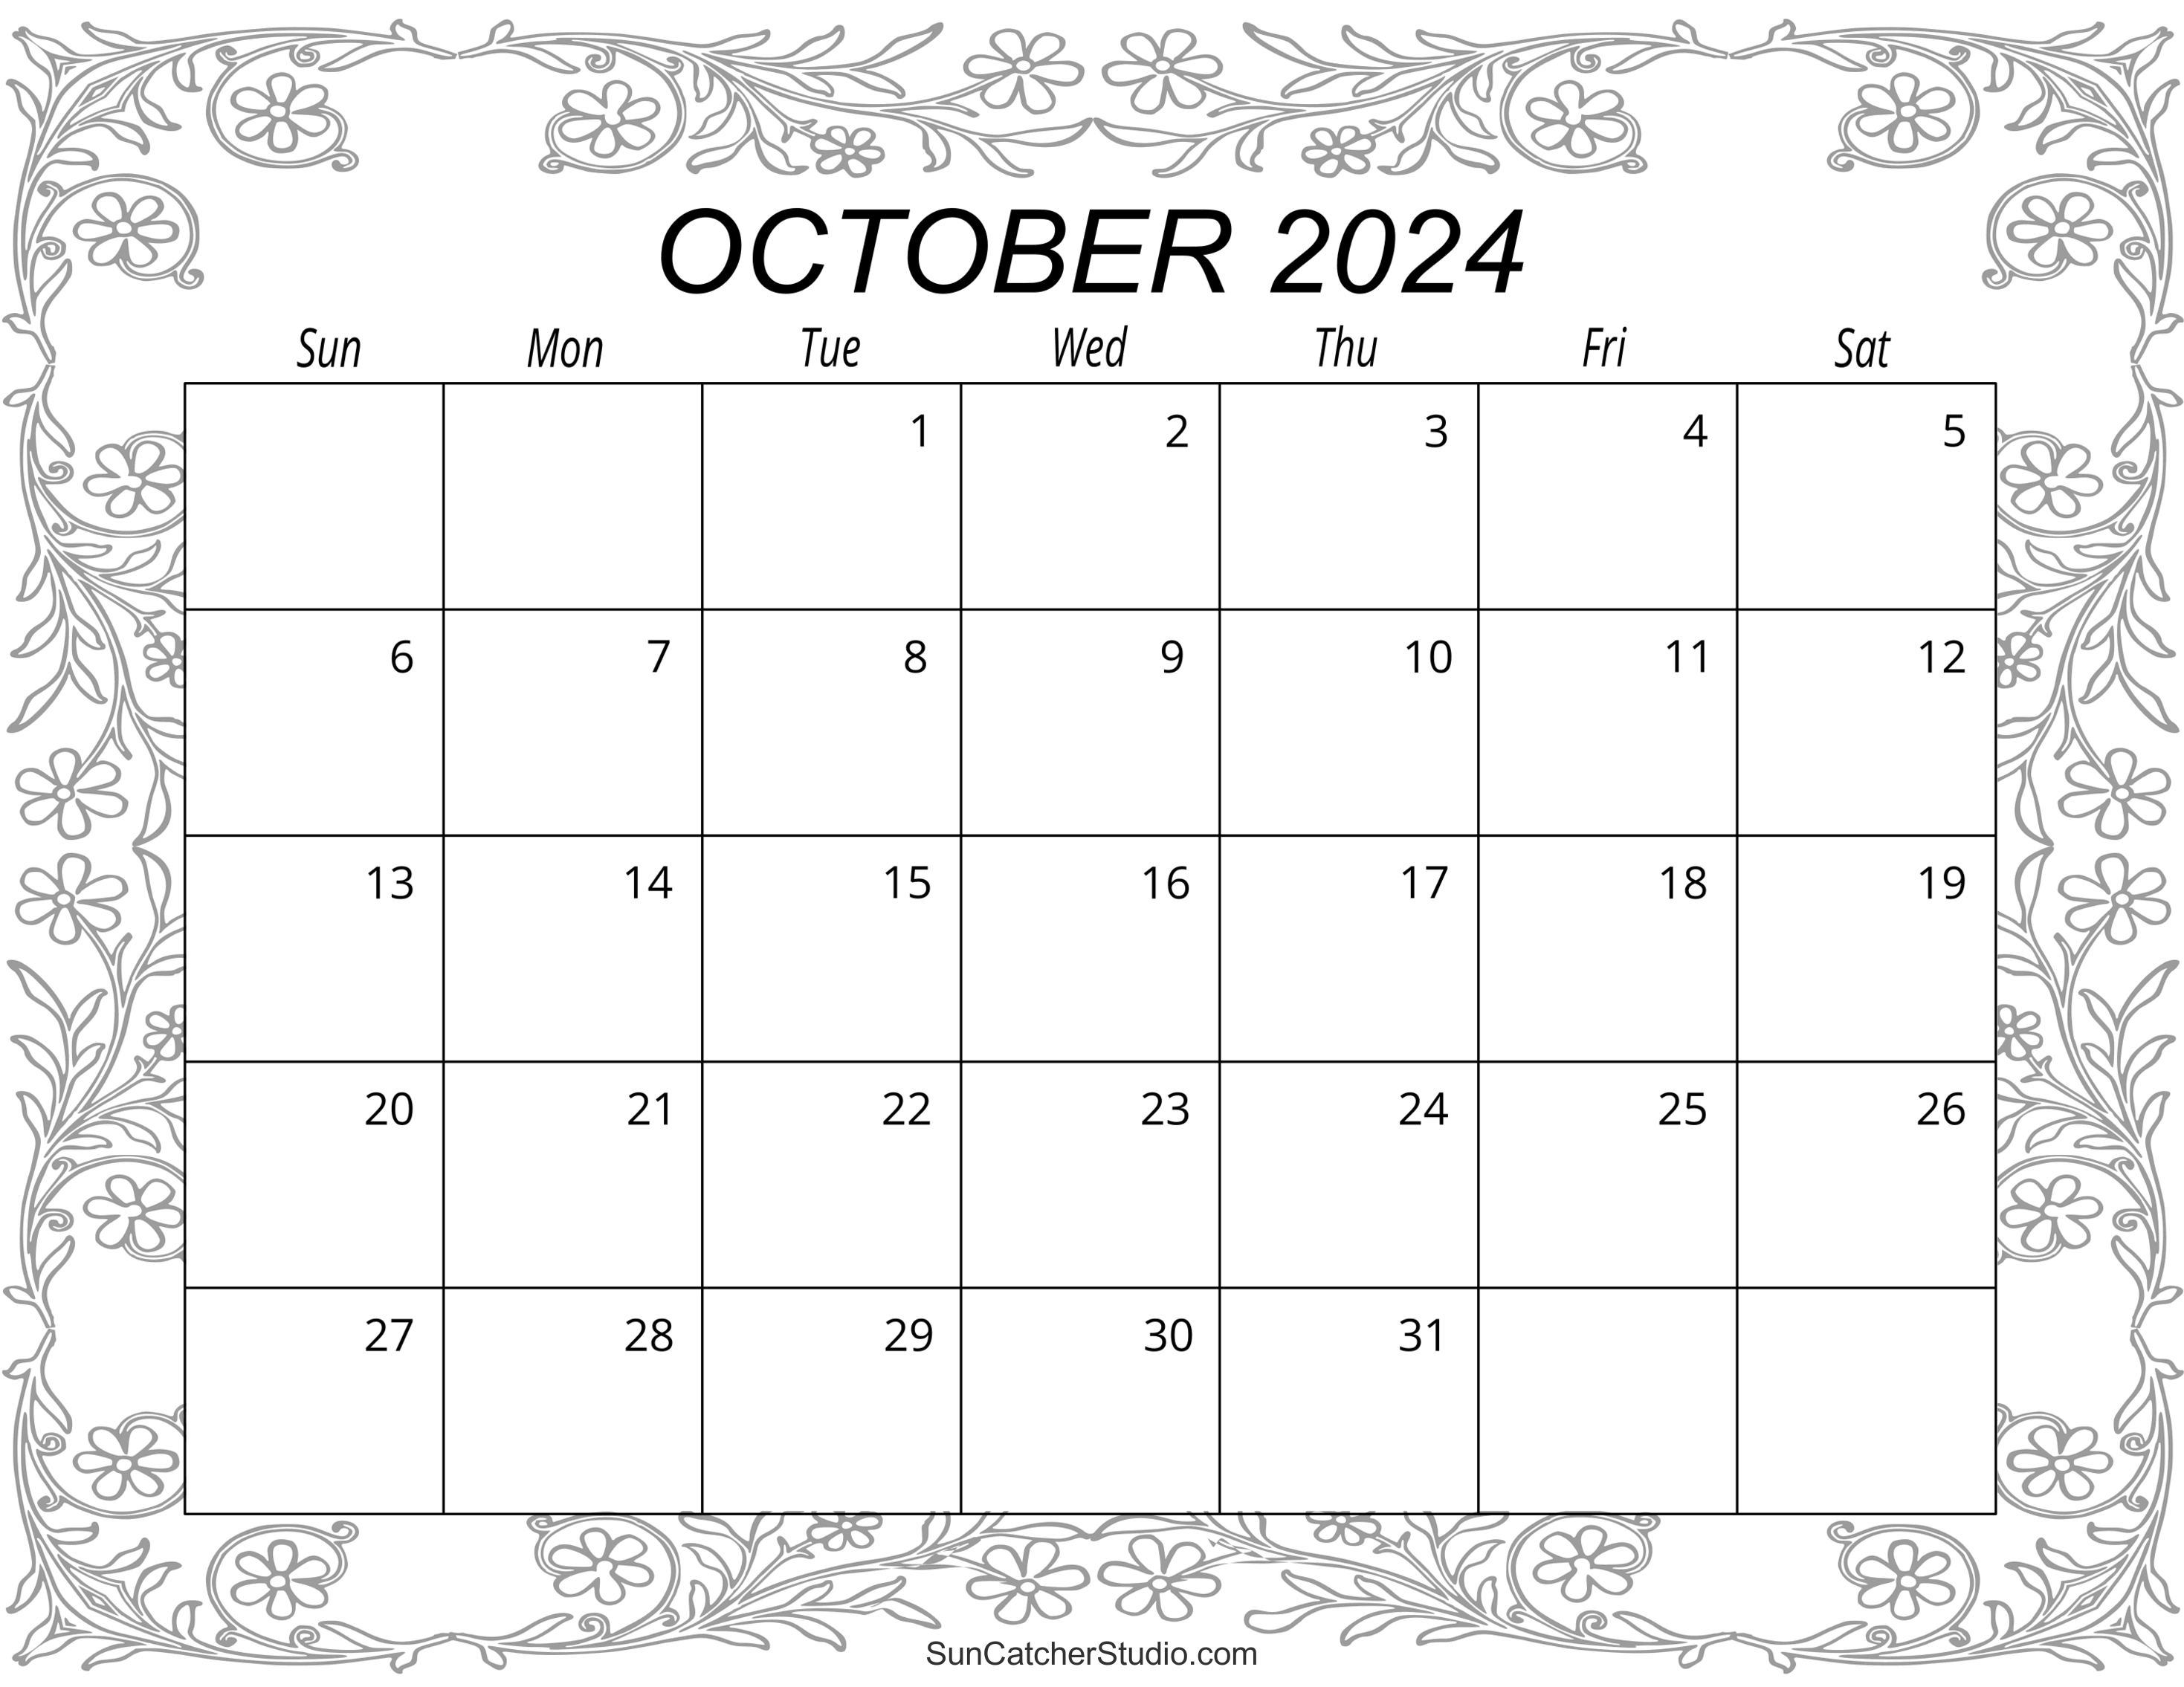 October 2024 Calendar (Free Printable) – Diy Projects, Patterns regarding Free Printable Calendar 2024 Vertex